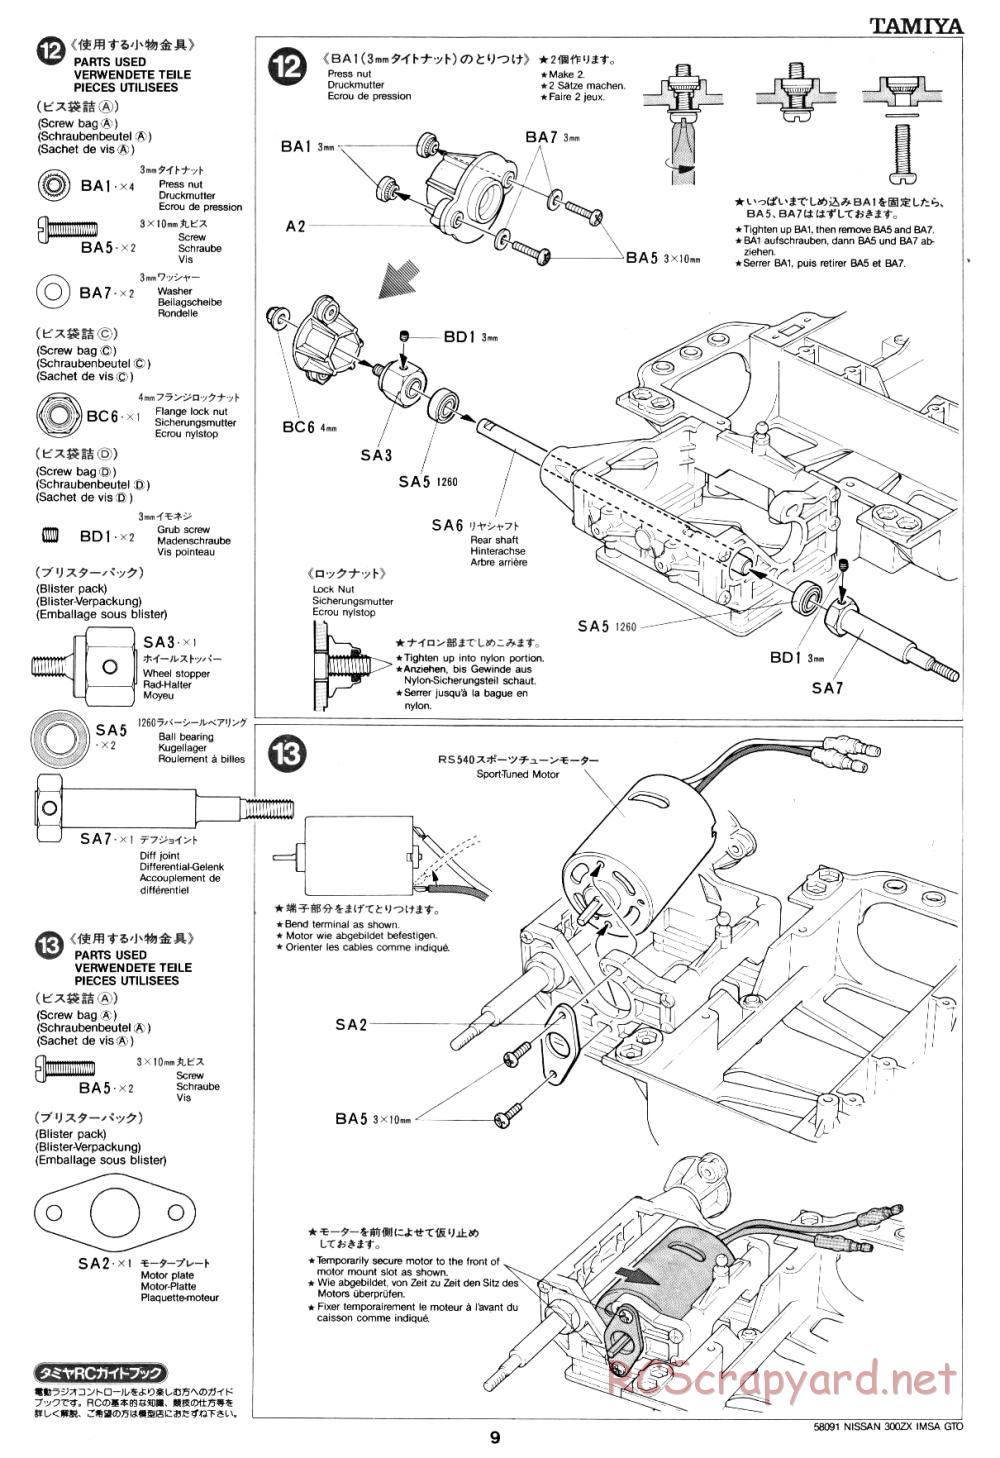 Tamiya - Nissan 300ZX IMSA GTO - 58091 - Manual - Page 9